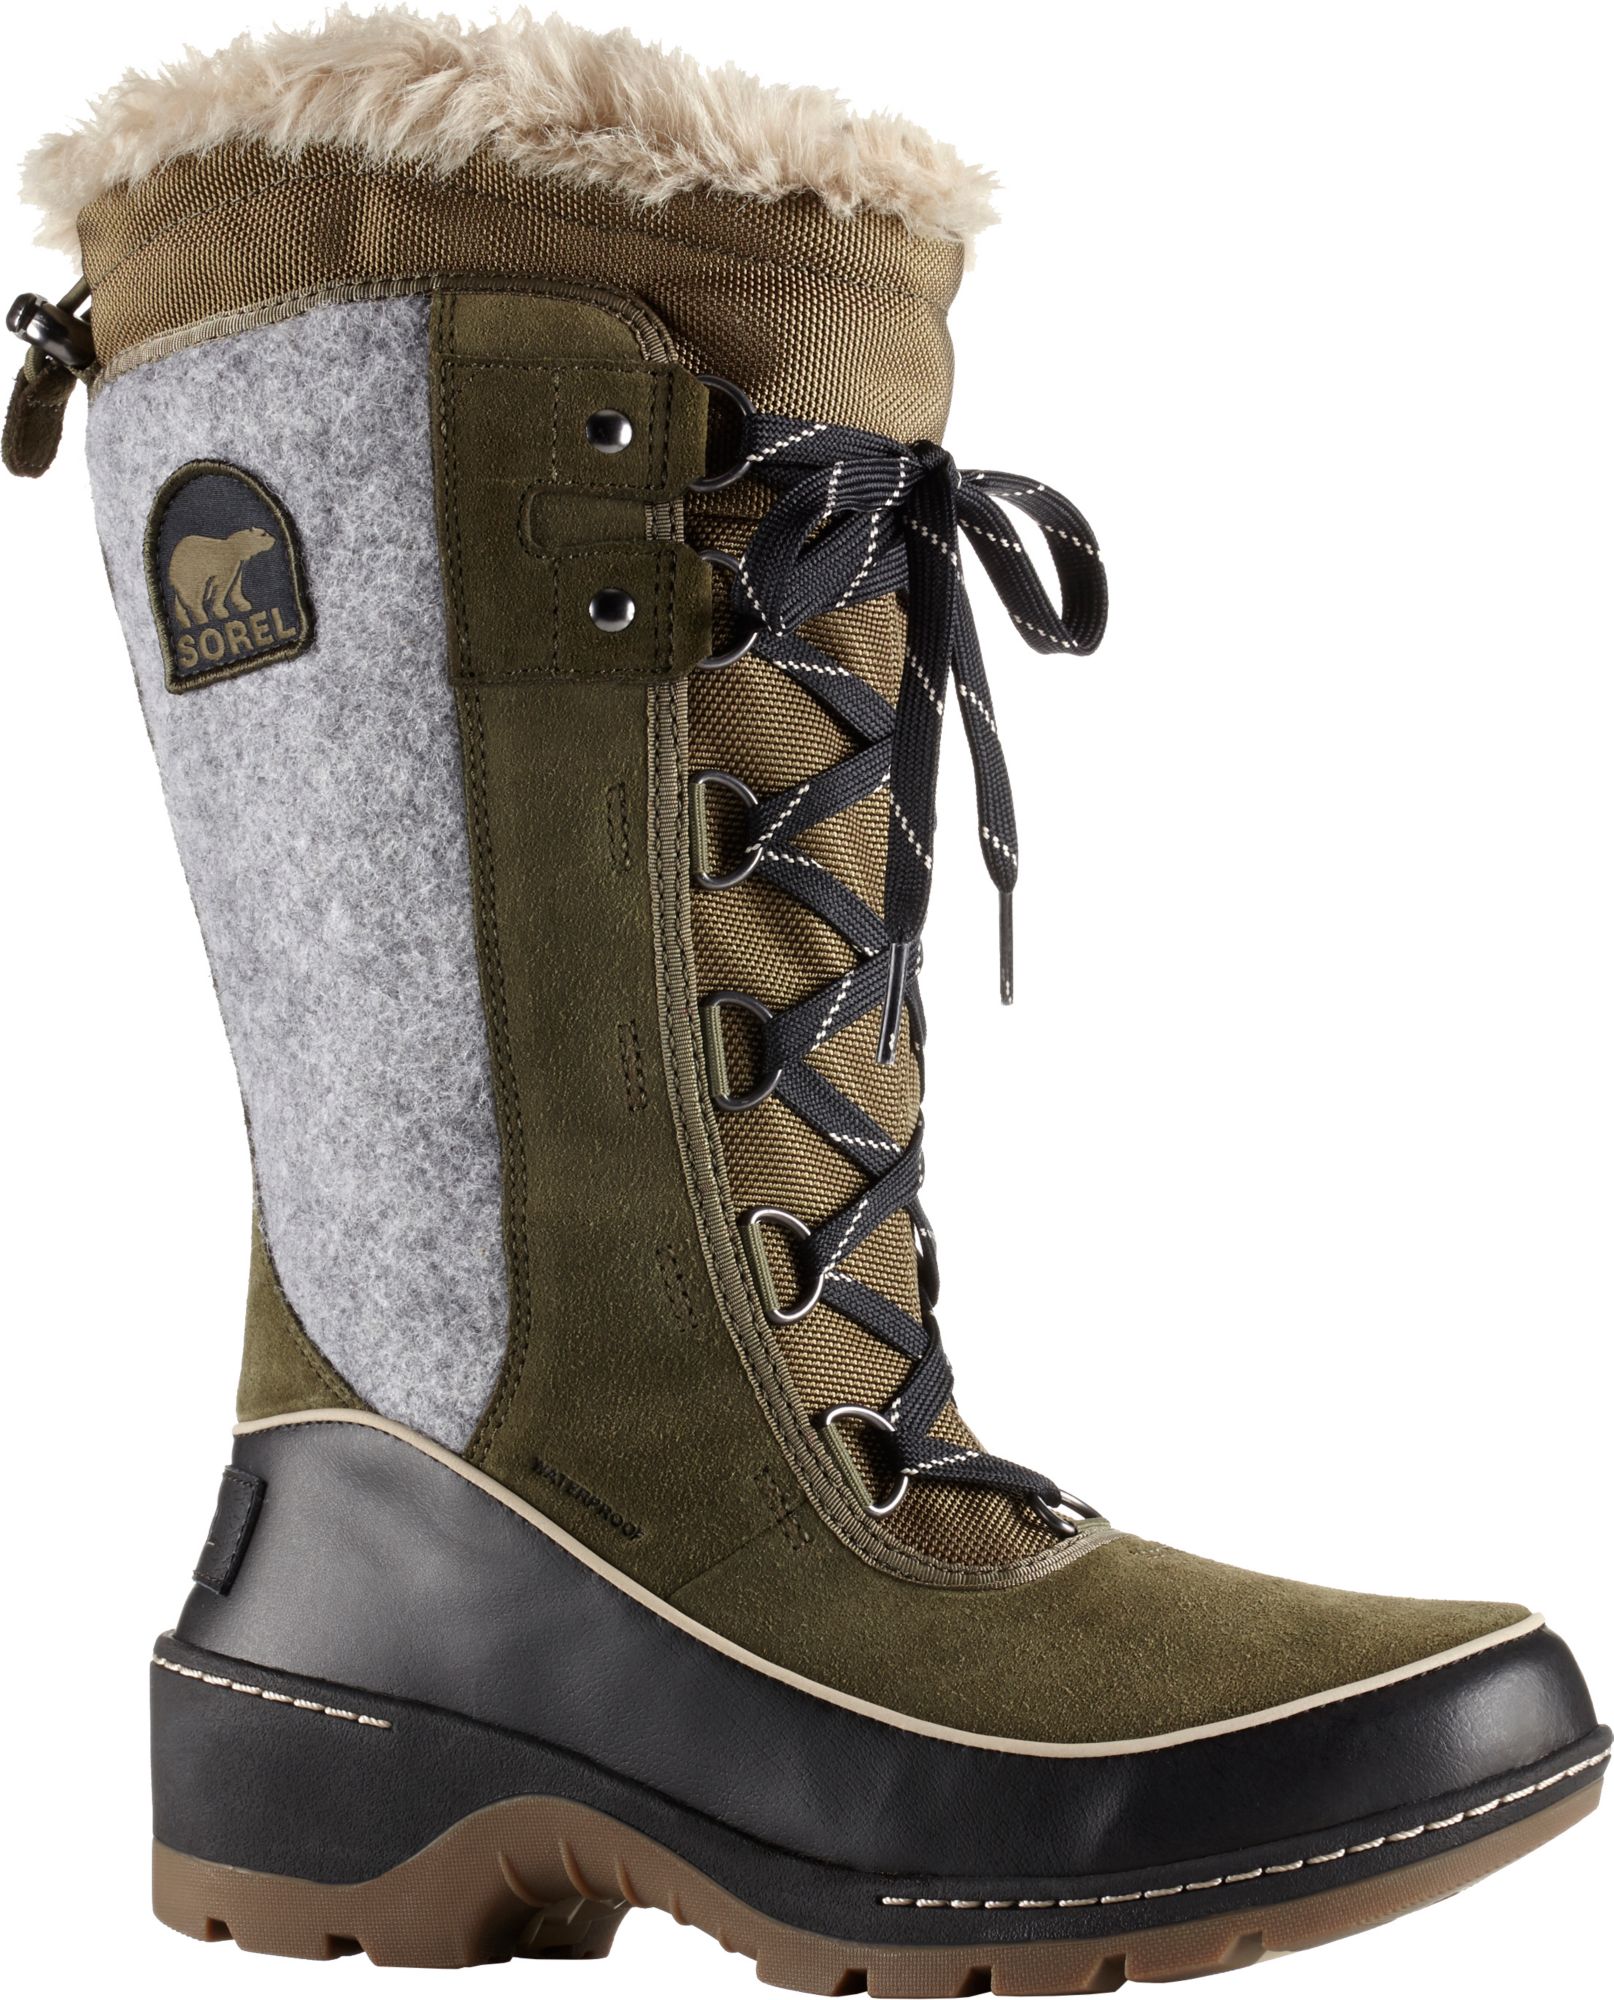 women winter boots product image · sorel womenu0027s tivoli iii high waterproof winter boots jeemgri